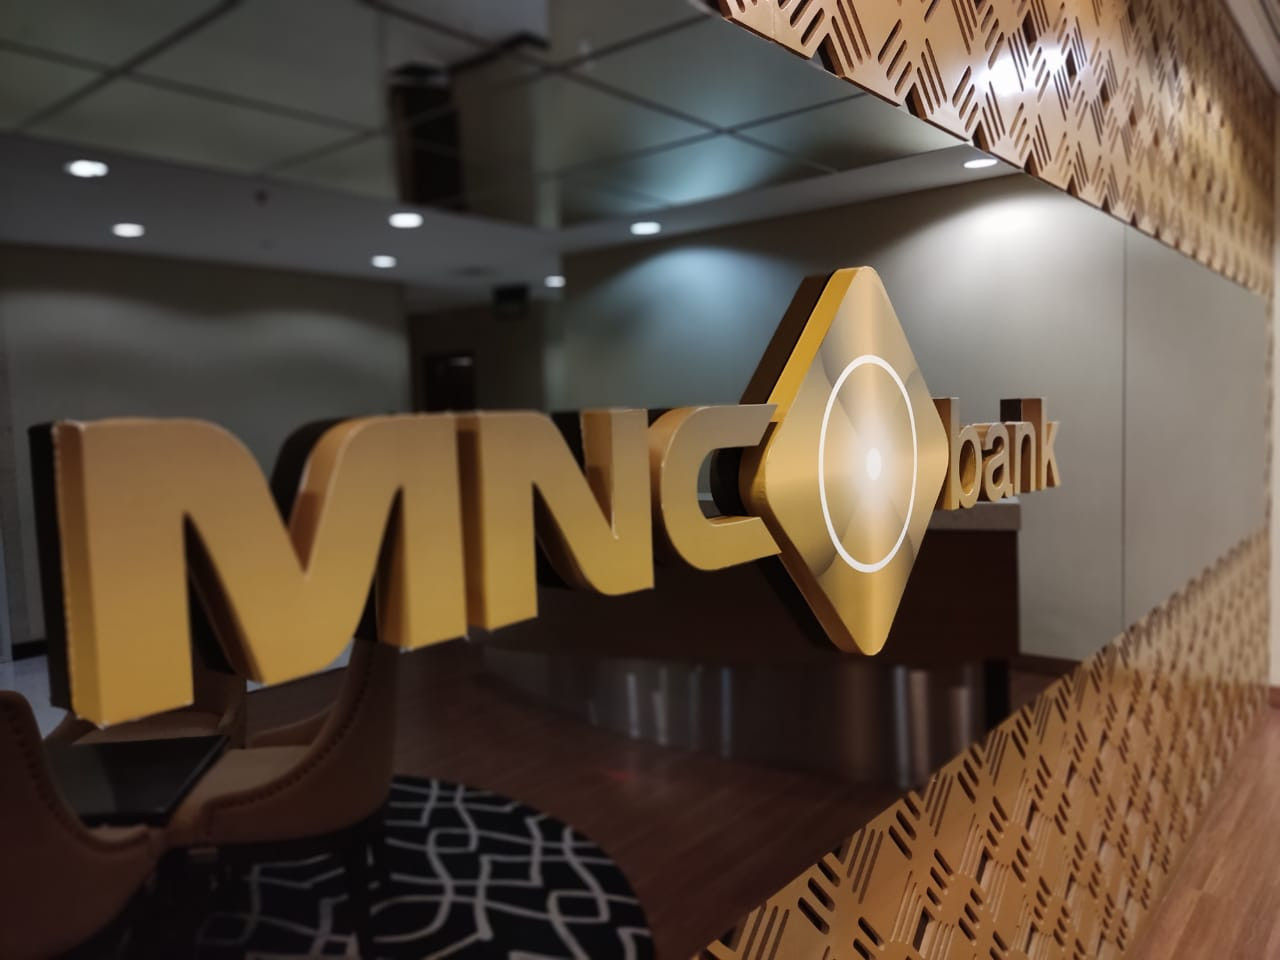 MNC Bank